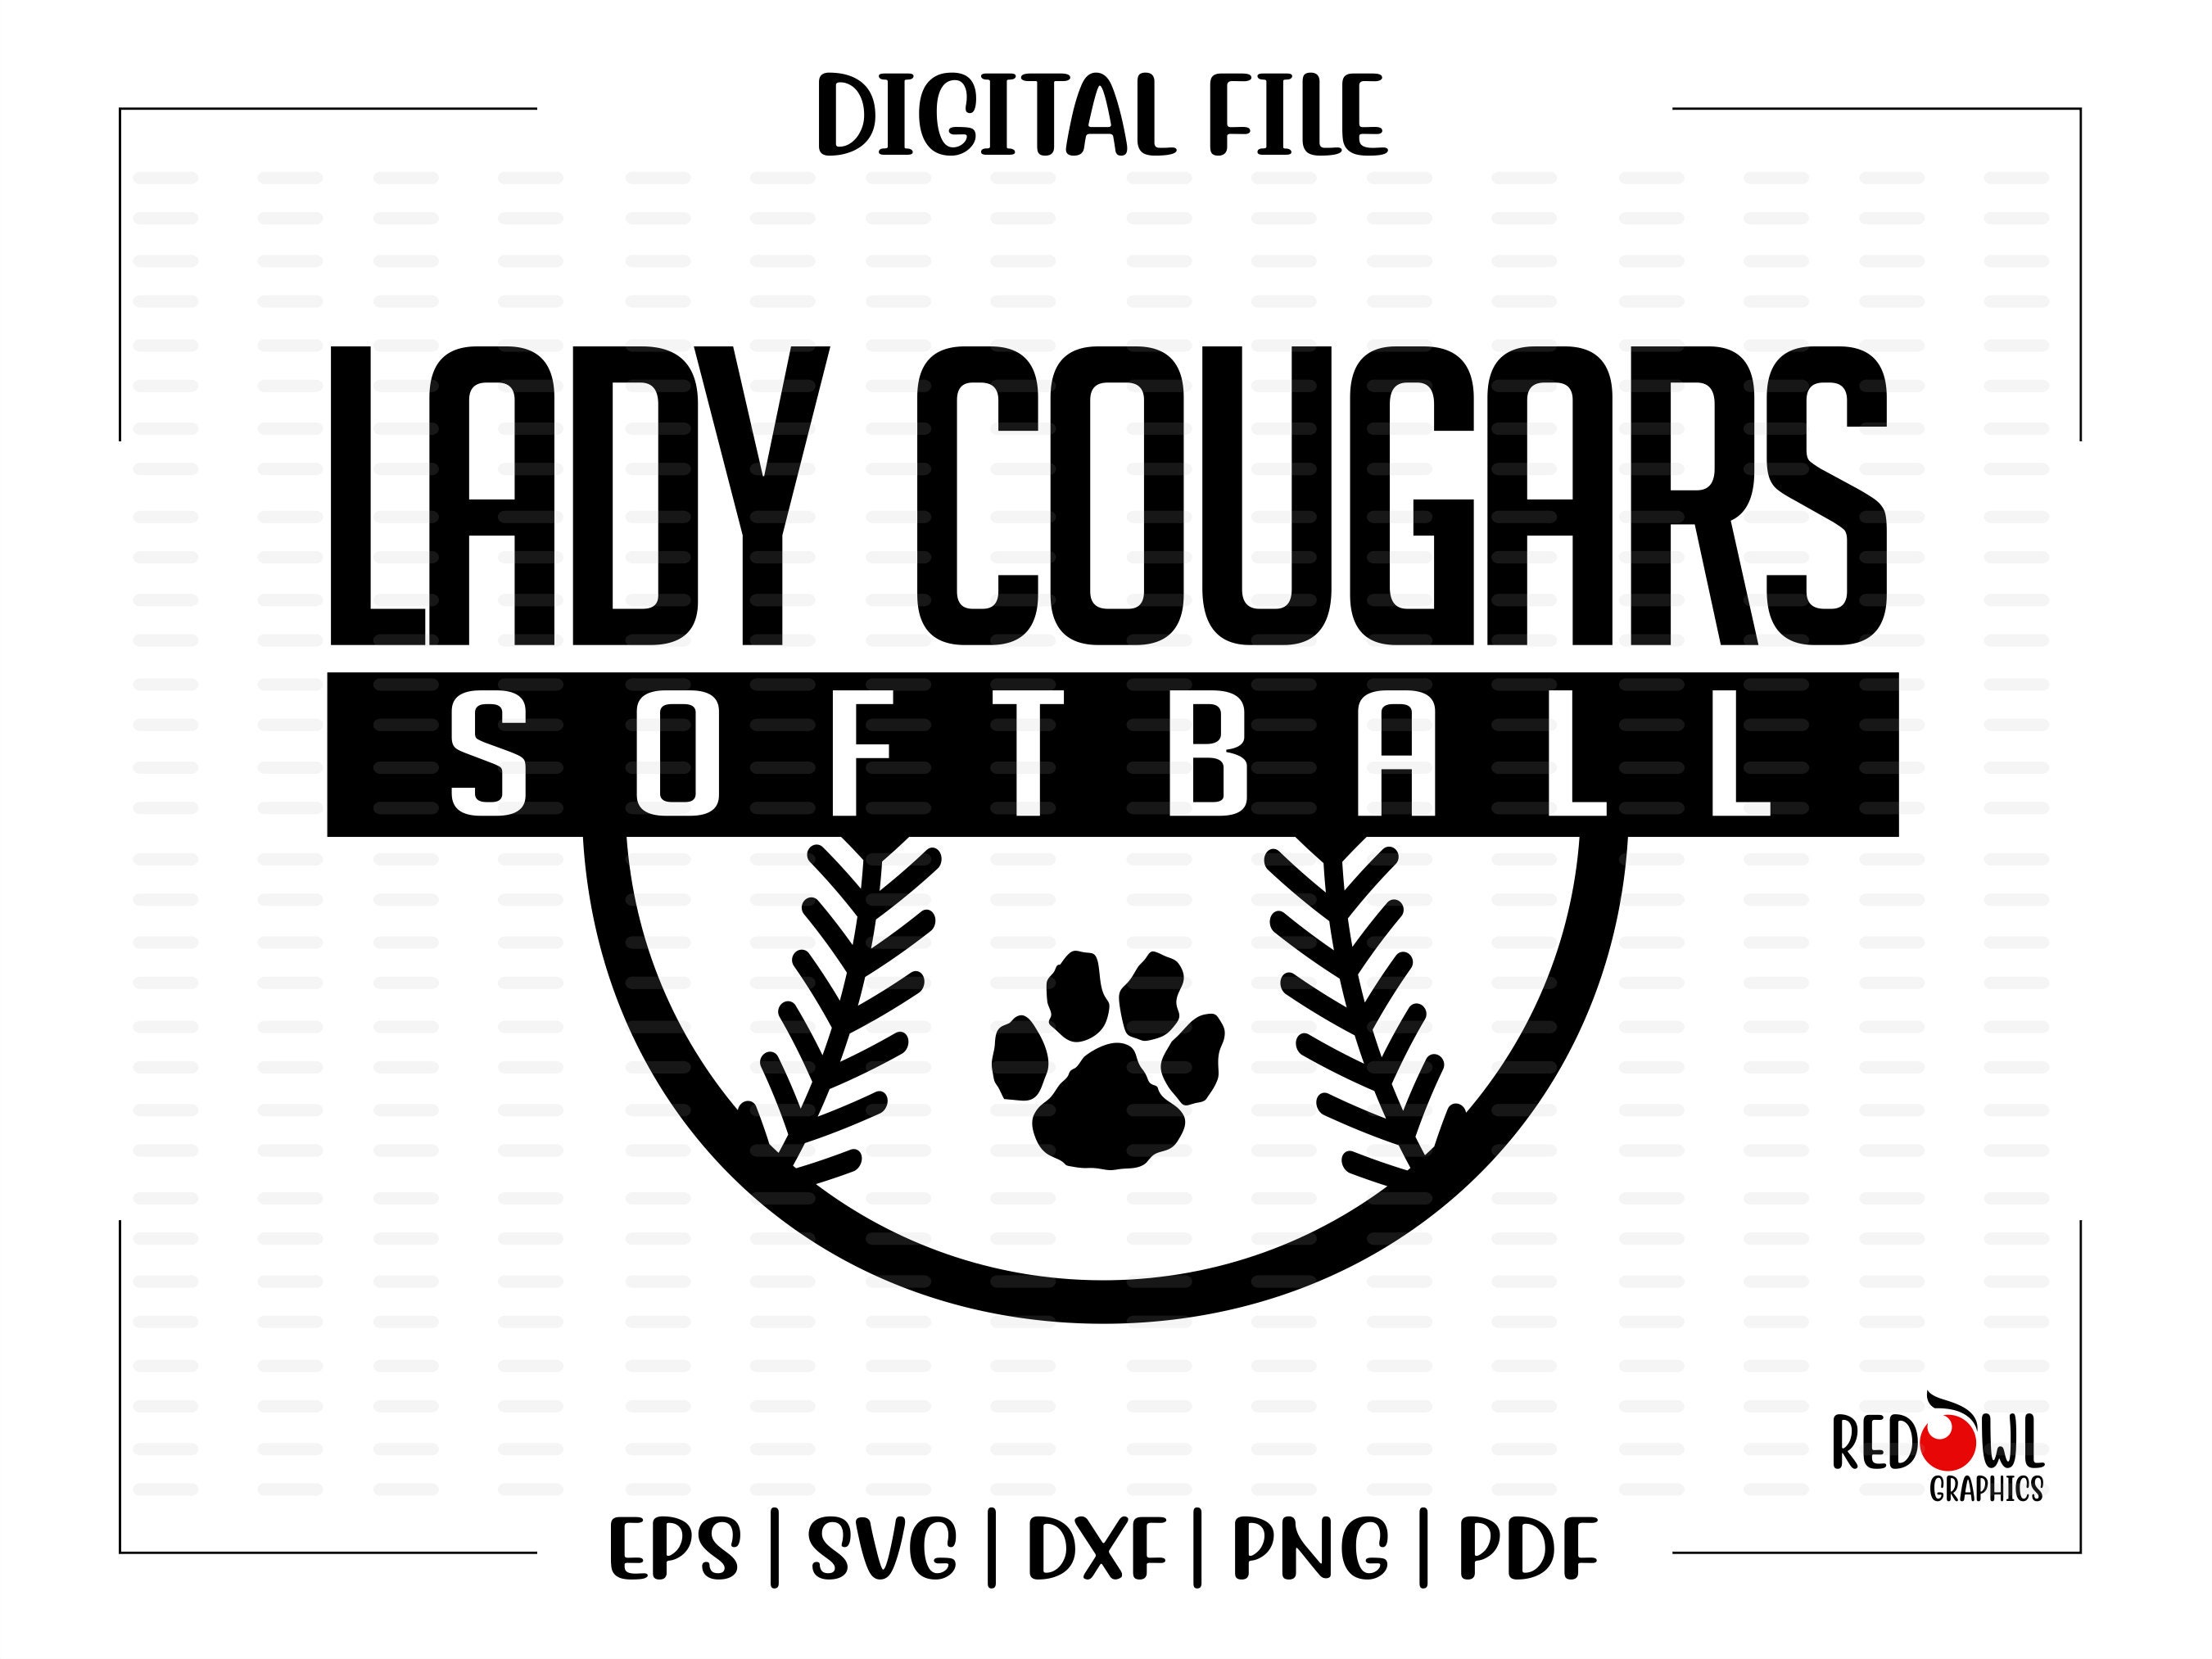 Cougars softball collectibles